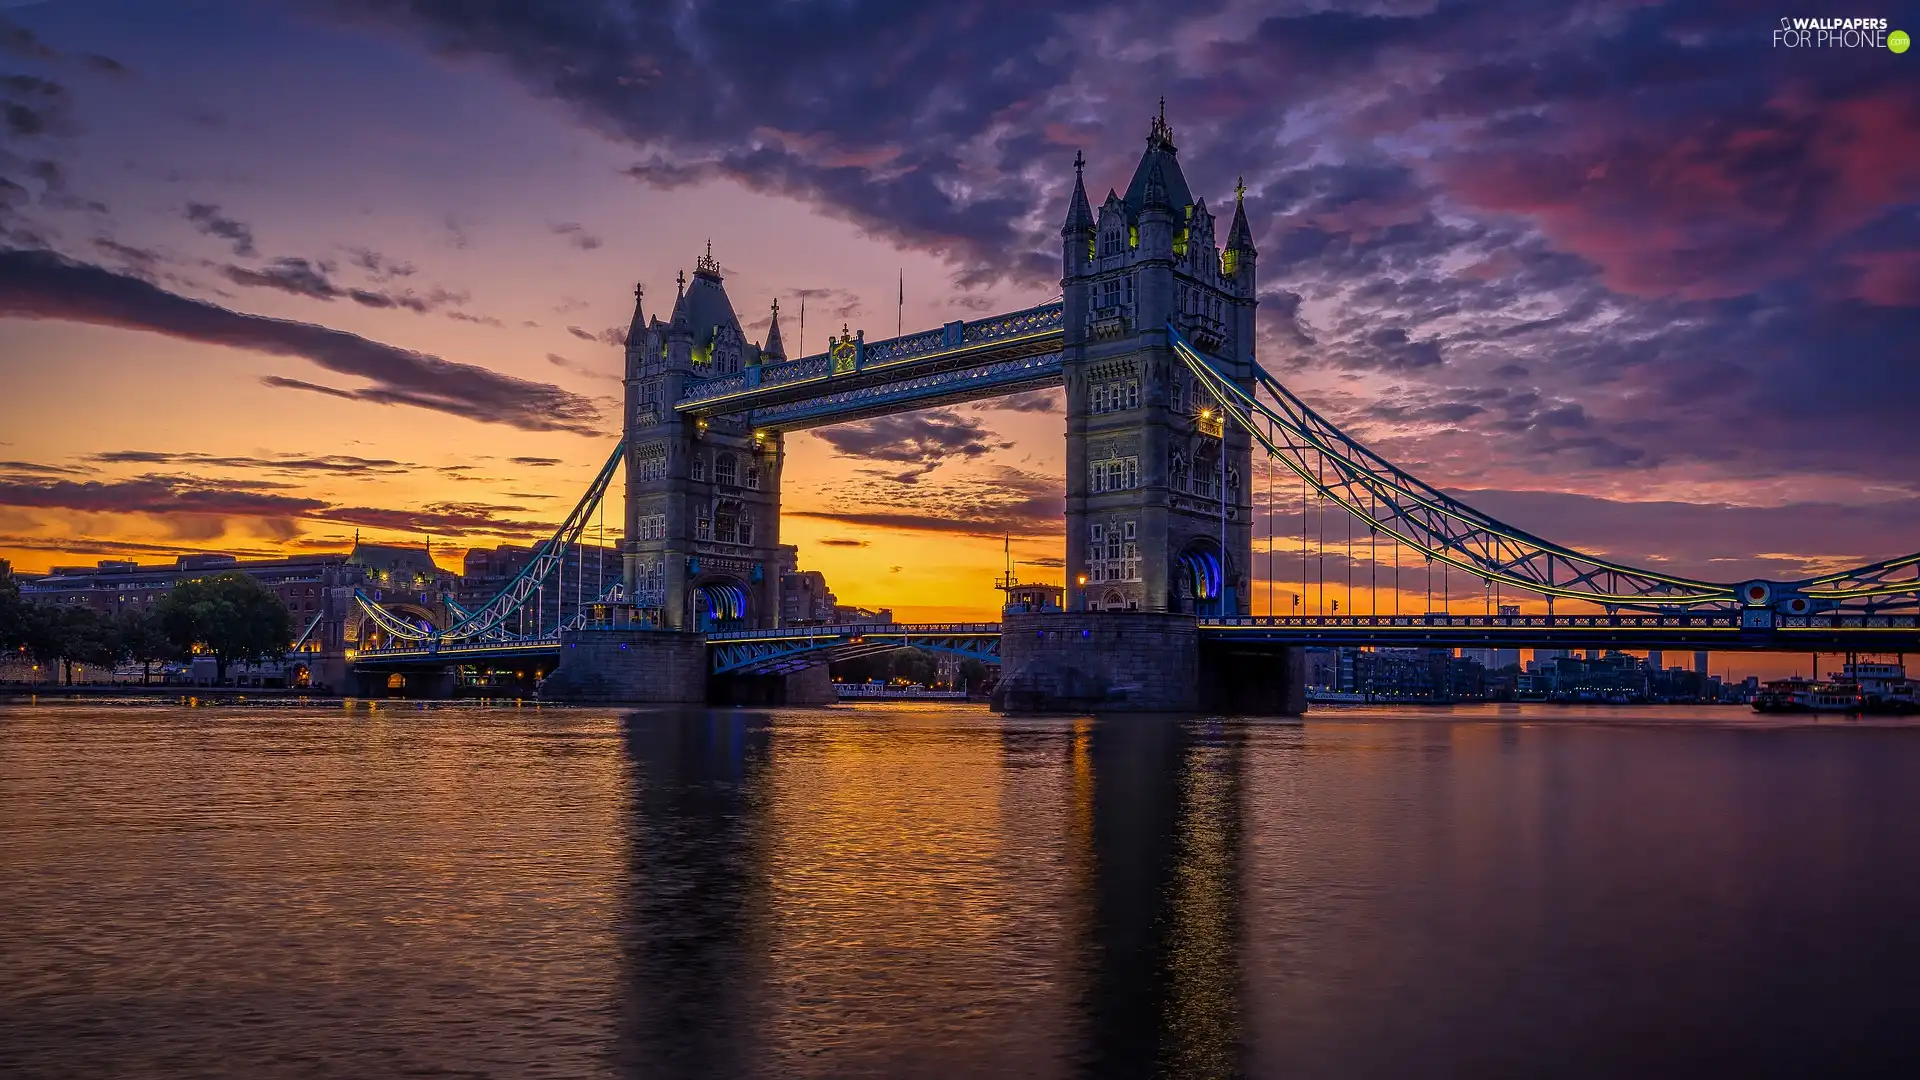 London, England, River Thames, bridge, clouds, Sunrise, bench, lanterns, Tower Bridge